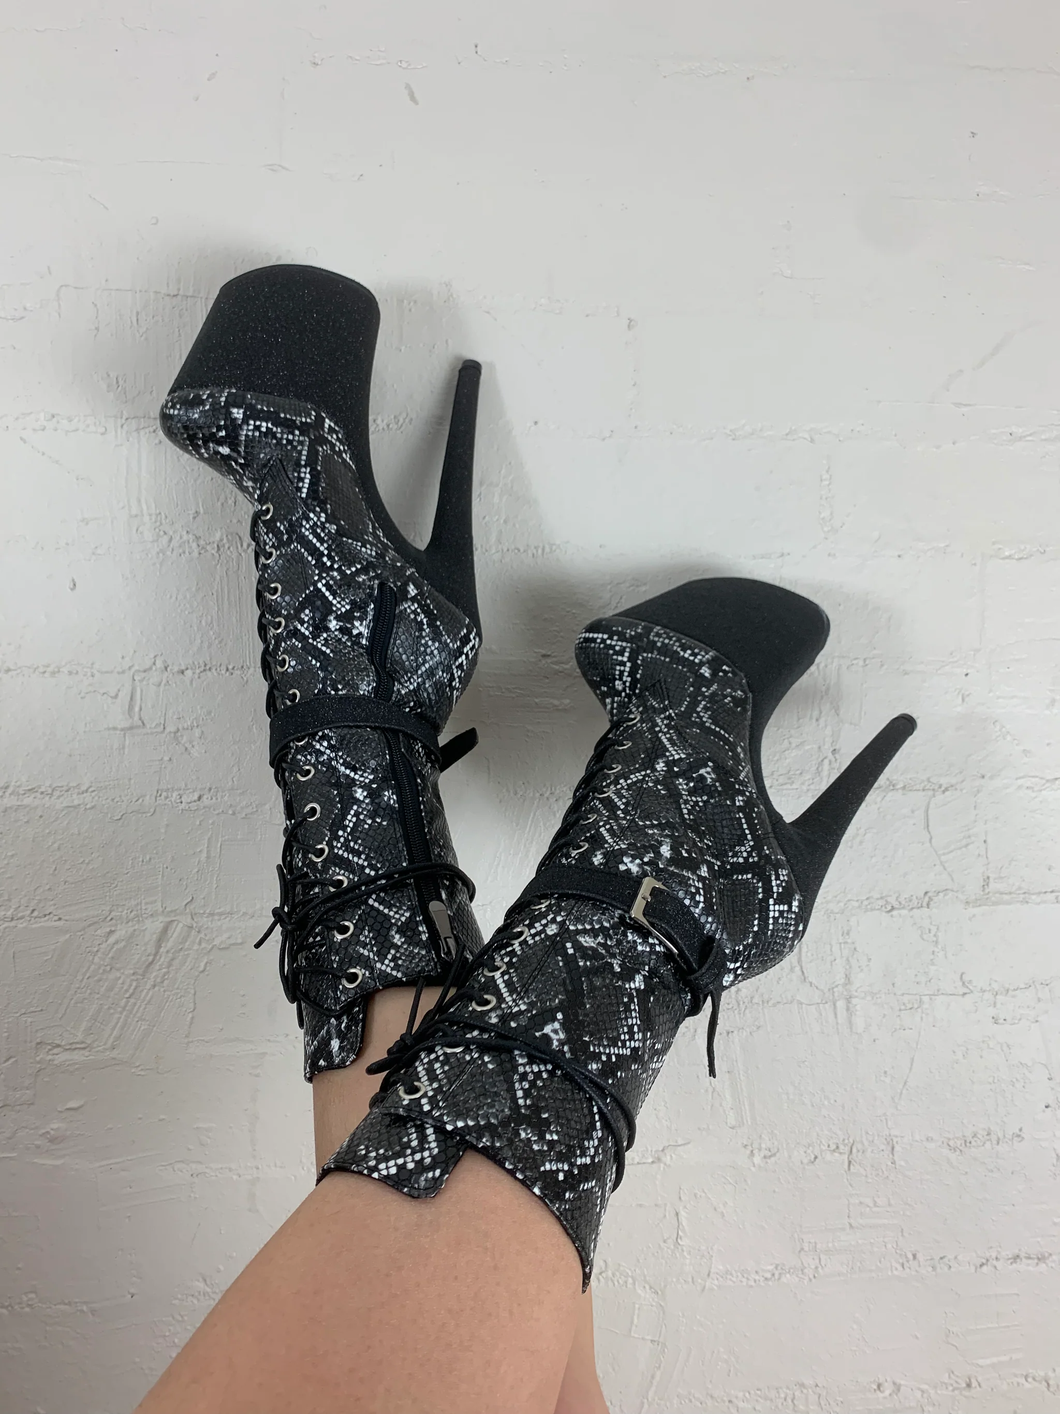 Lily Frog Heels: Medusa Onyx Mid Calf 8 inch heels